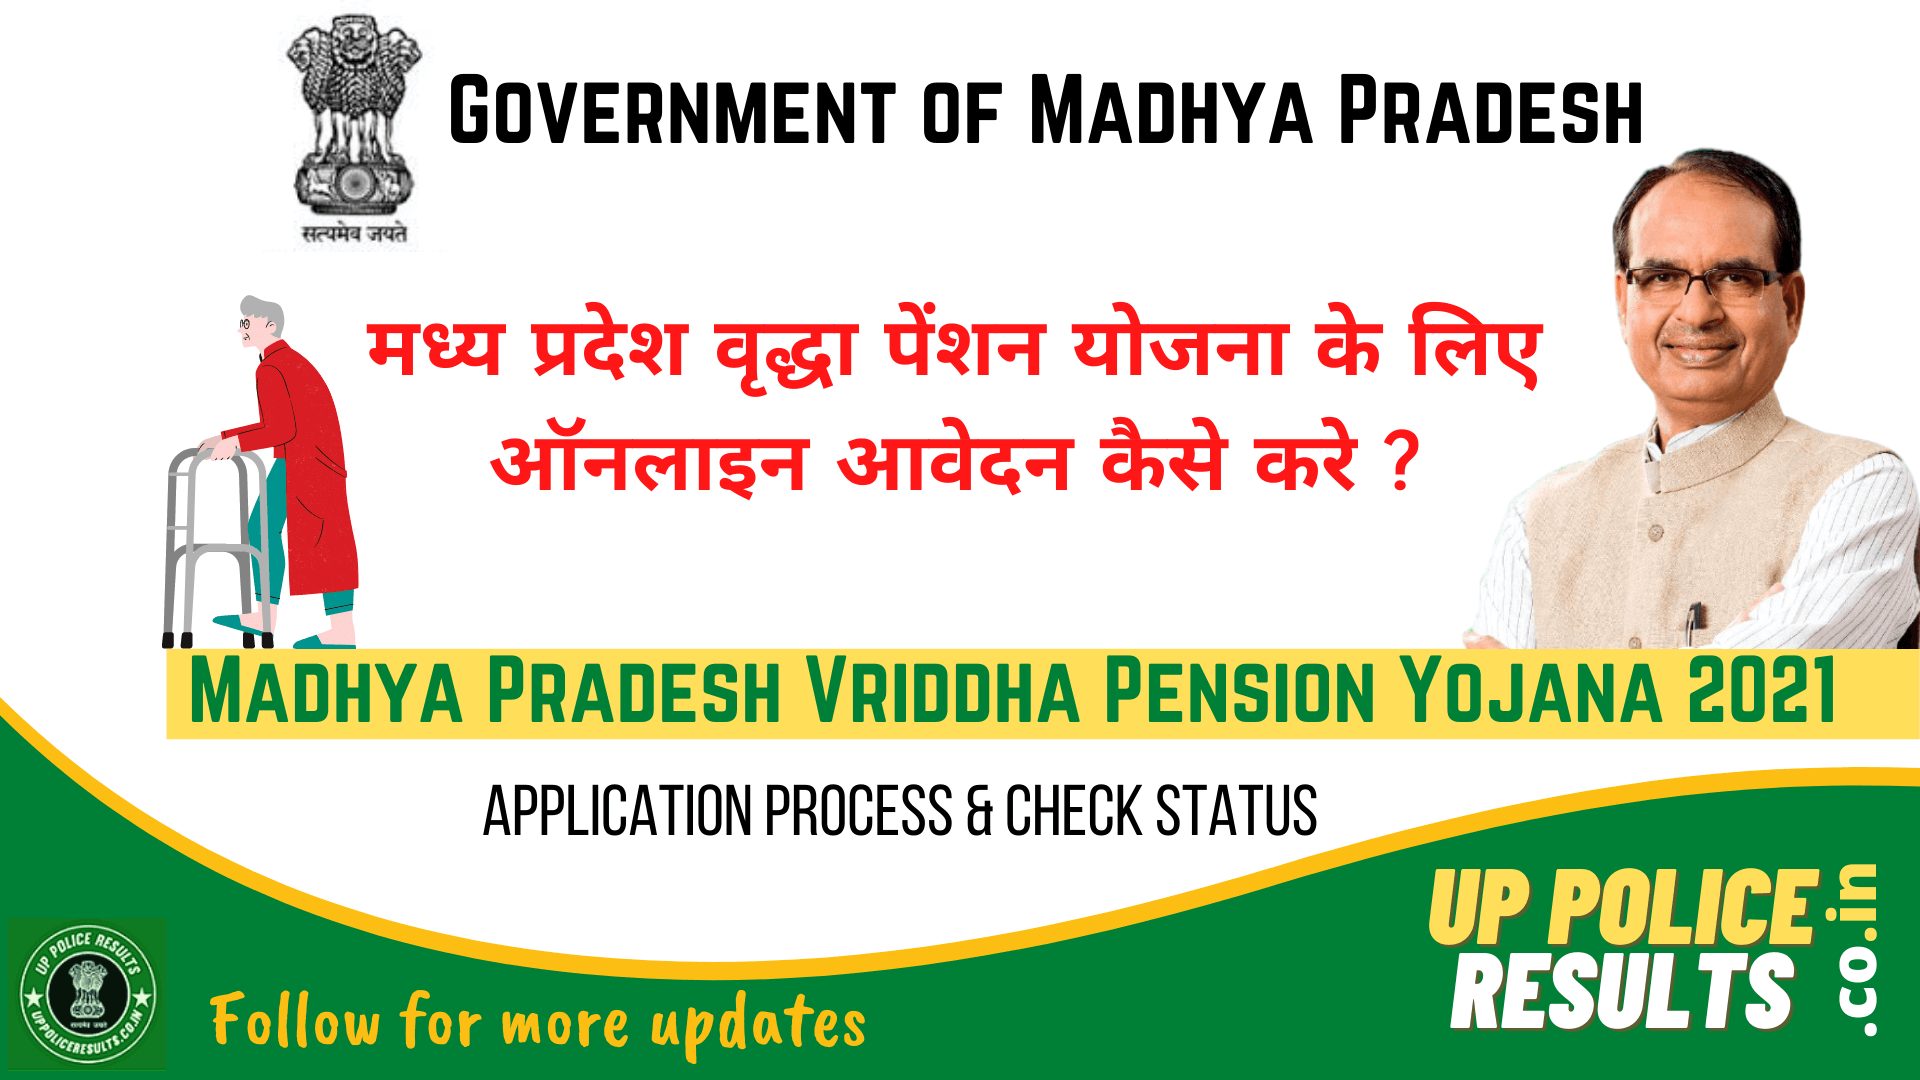 Madhya Pradesh Vriddha Pension Yojana 2021